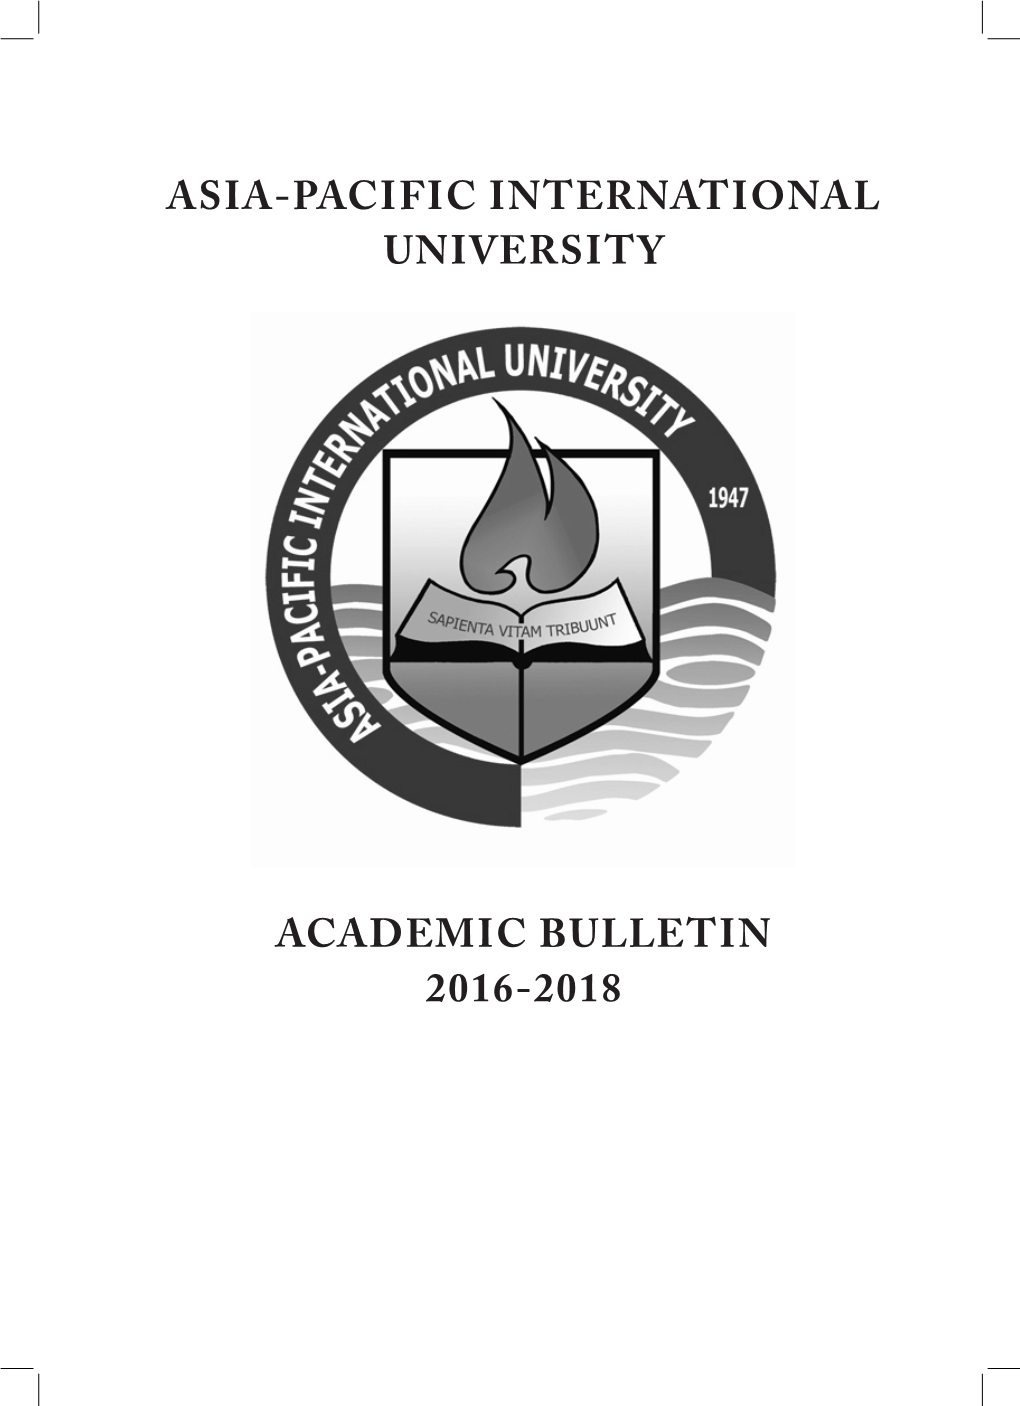 Asia-Pacific International University Academic Bulletin 2016-2018